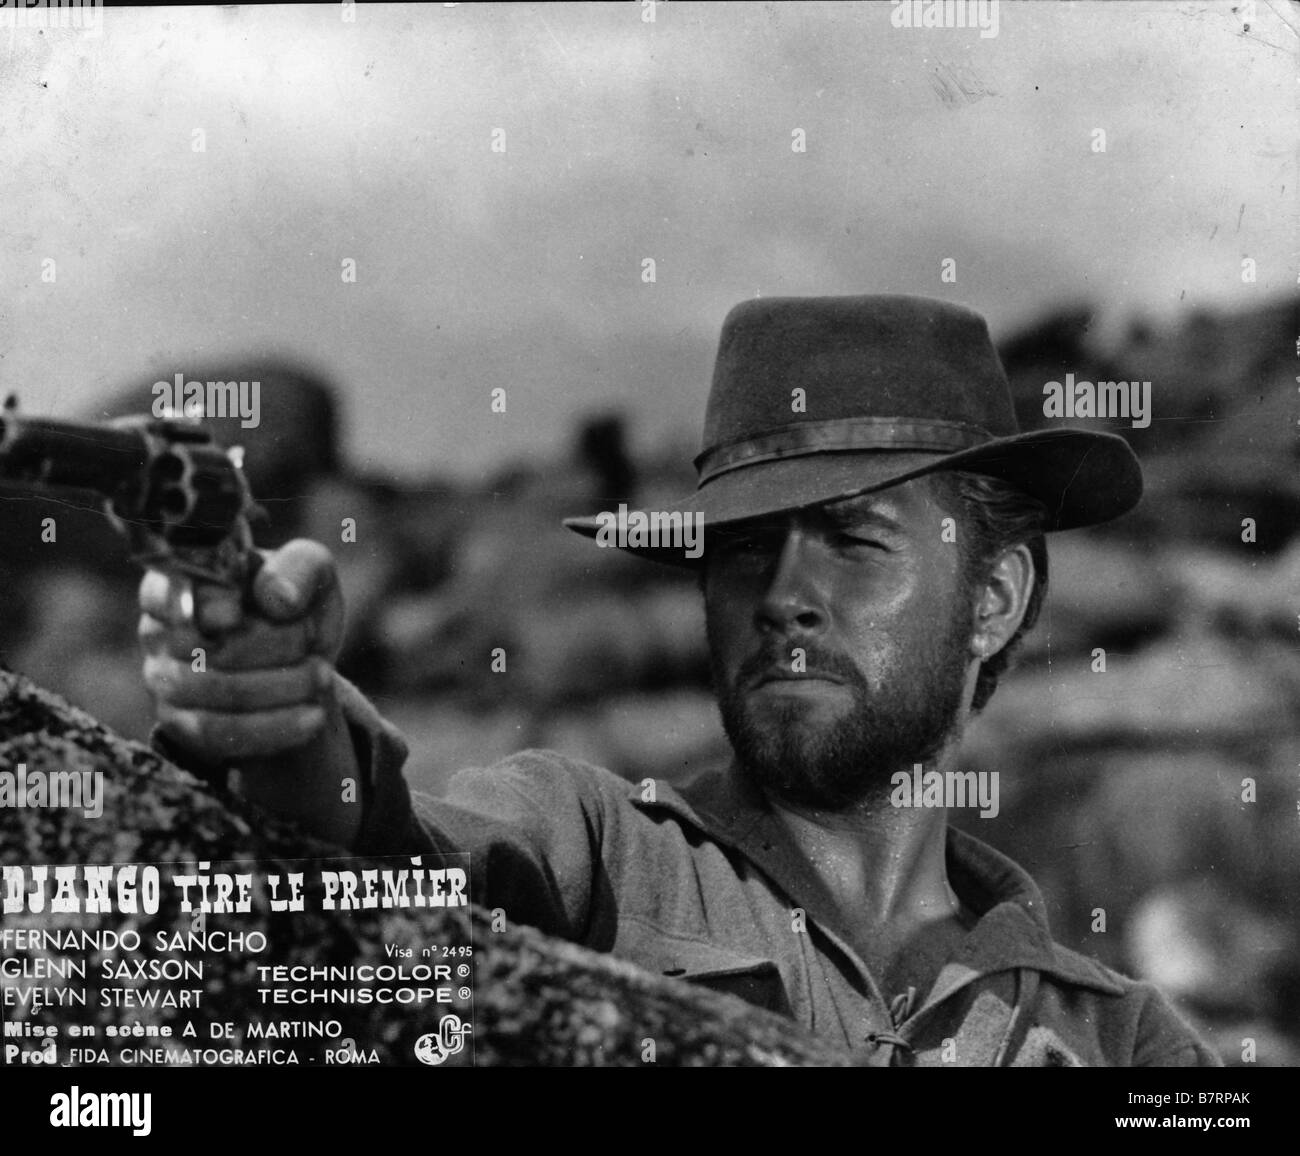 Django spara per primo Year: 1966 Italy Glenn Saxson Director: Alberto De  Martino Stock Photo - Alamy